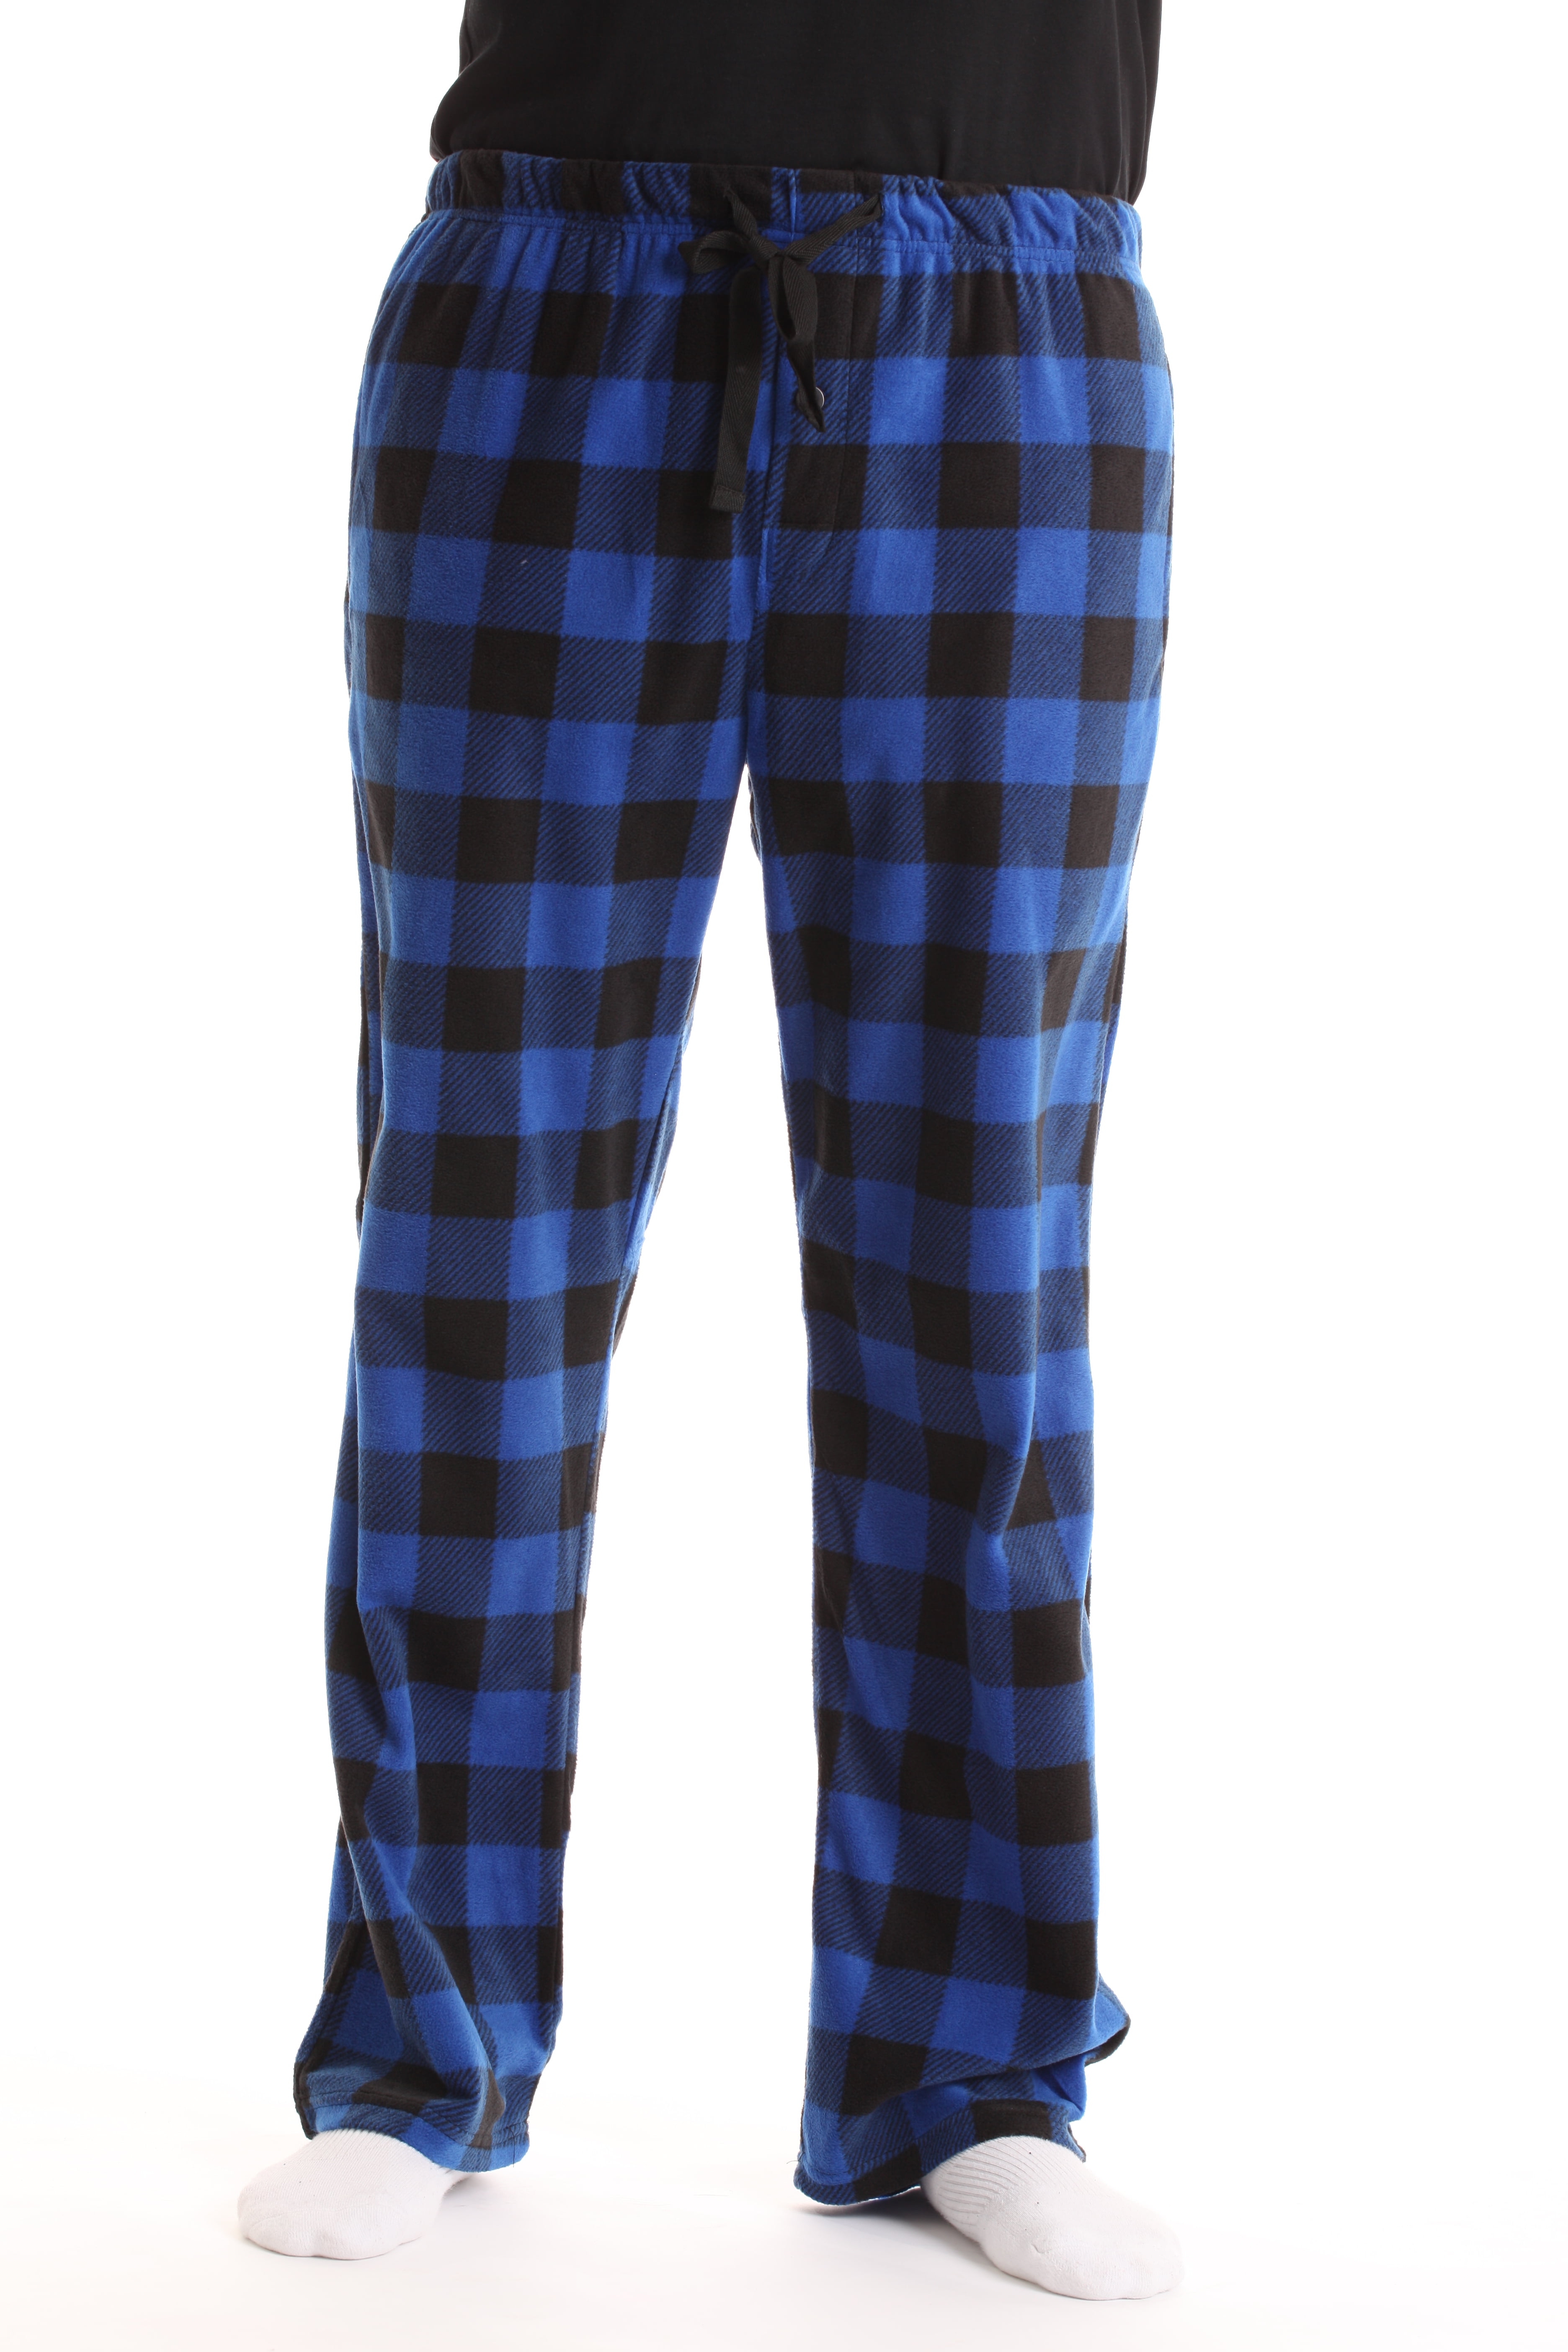 Microfleece Mens Plaid Pajama Pants with Pockets (Red Buffalo Plaid, Large)  